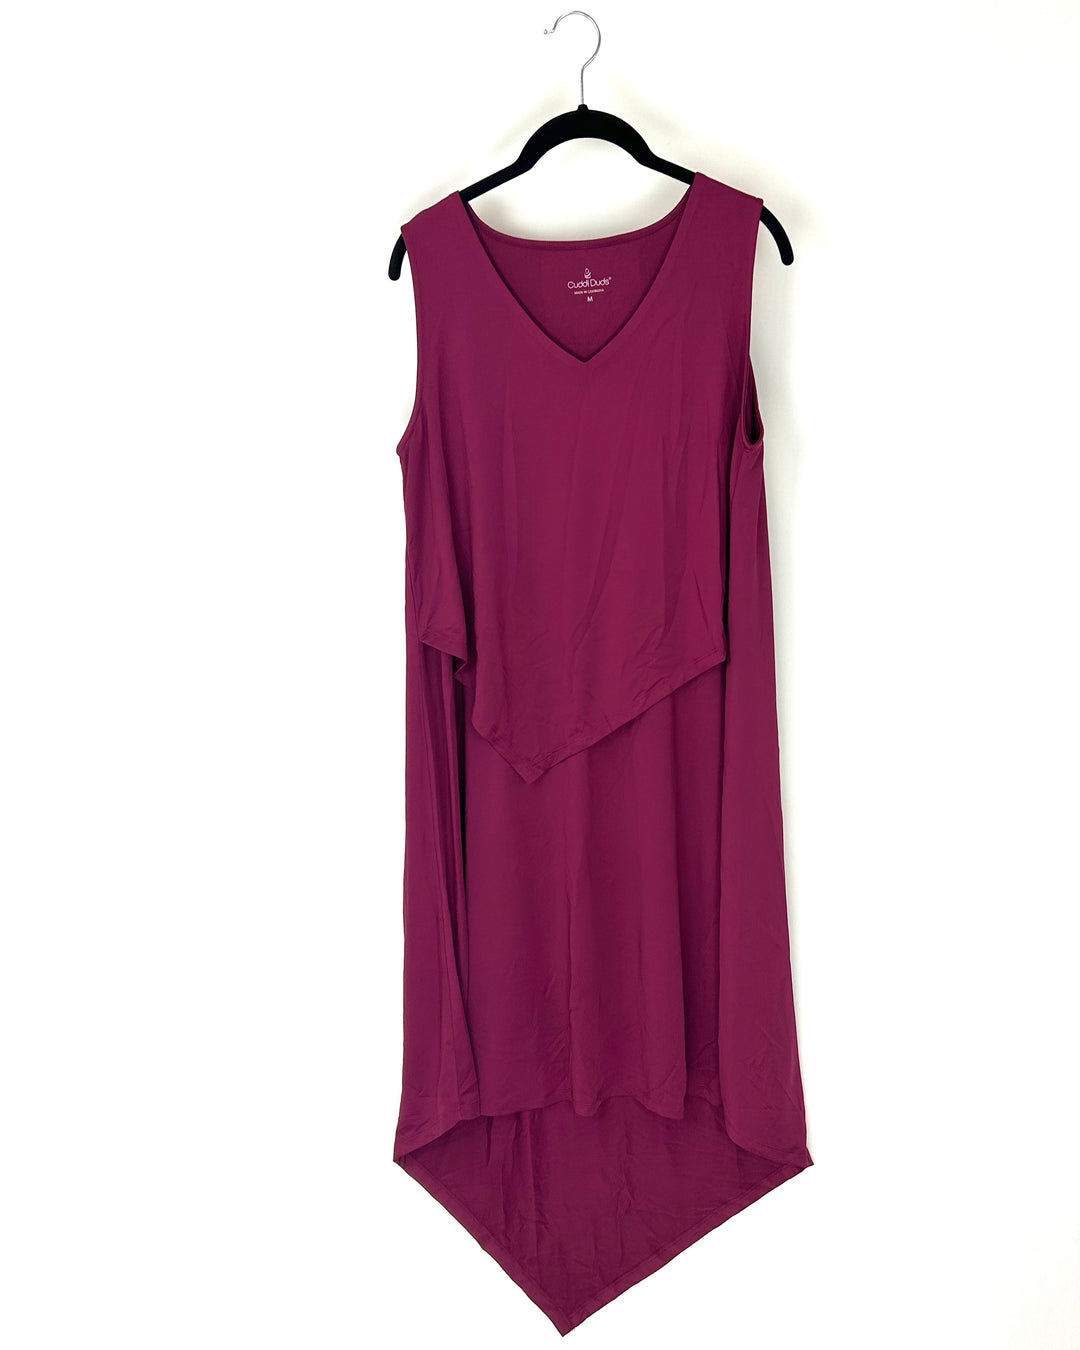 Plum Asymmetrical Dress - Size 10/12